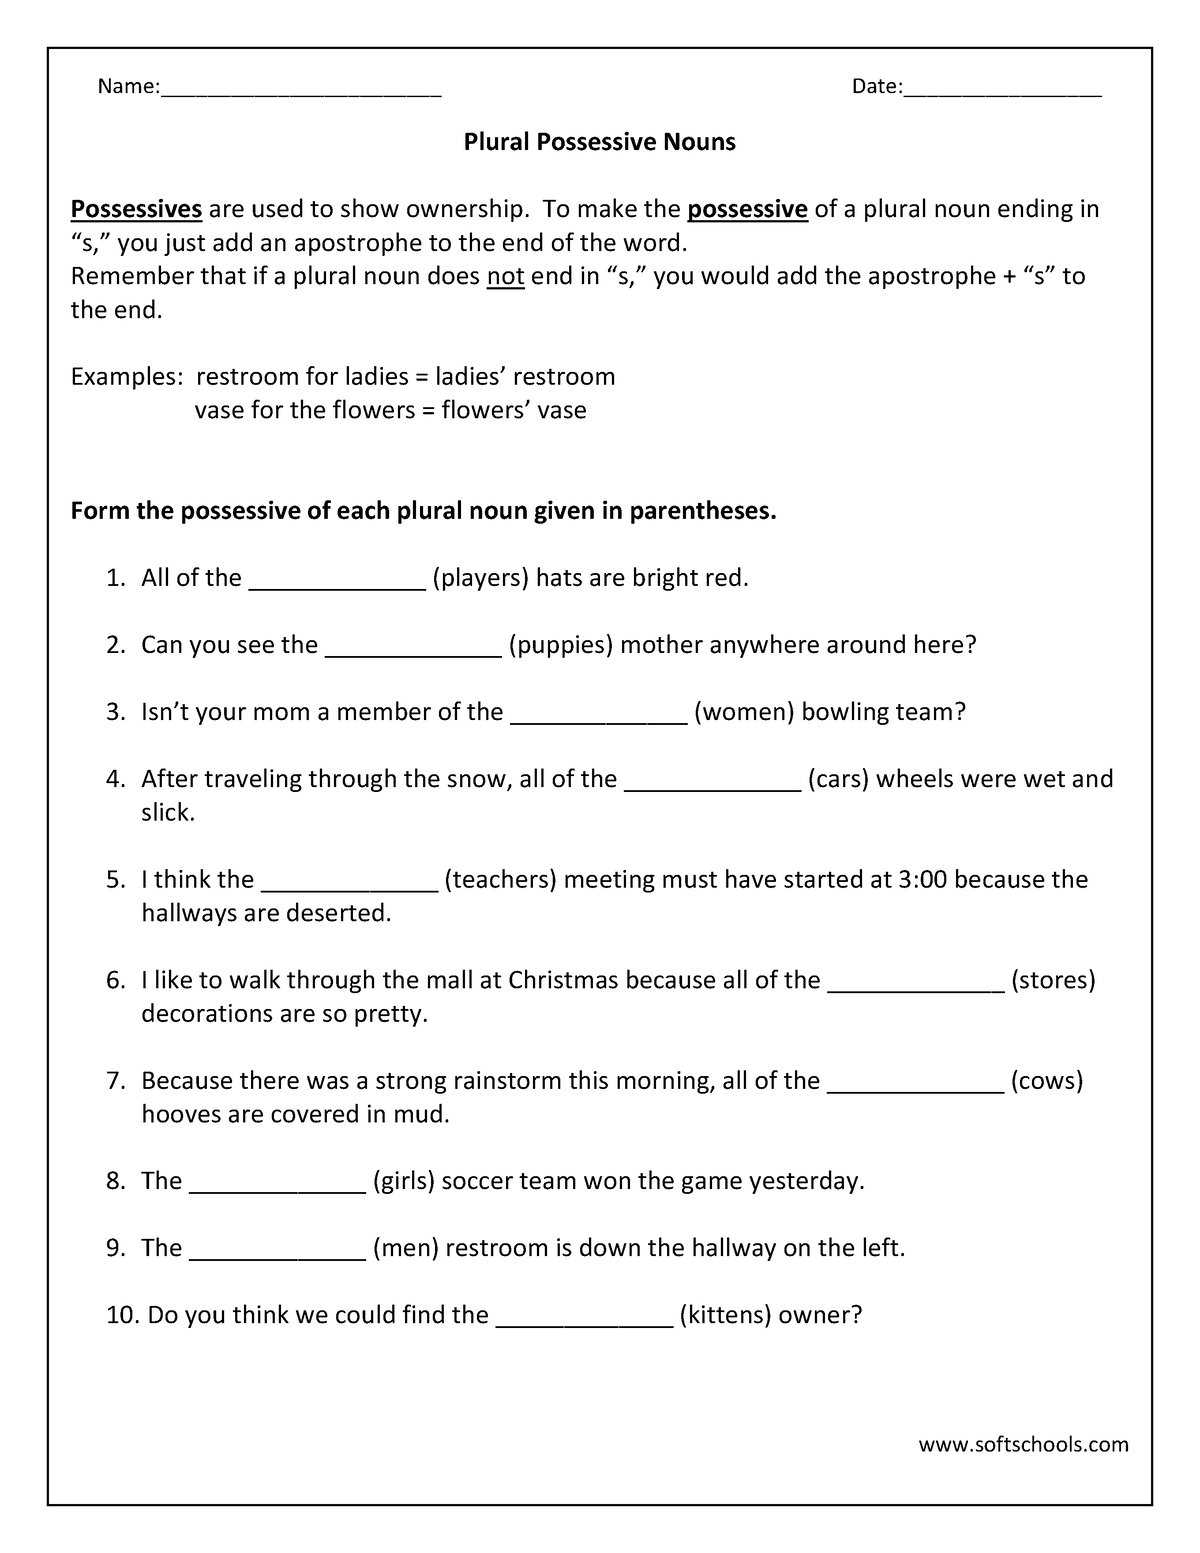 plural-possessive-nouns-6th-grade-worksheet-name